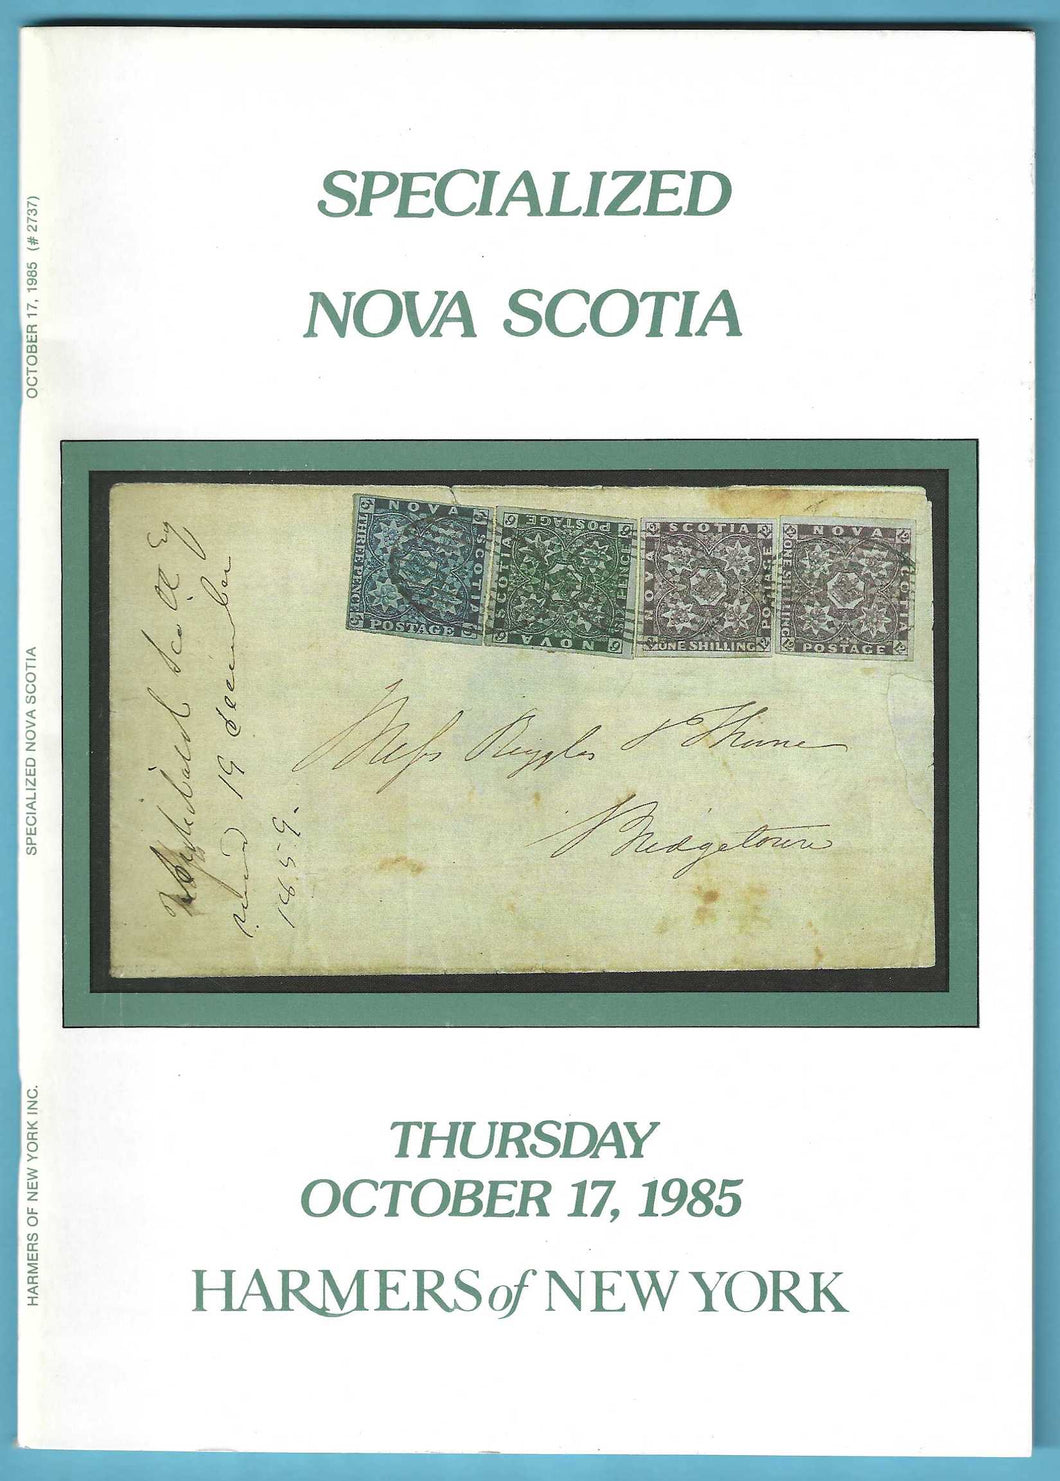 Nova Scotia Specialized, Harmers of New York, Sale 2737, Oct. 17, 1985